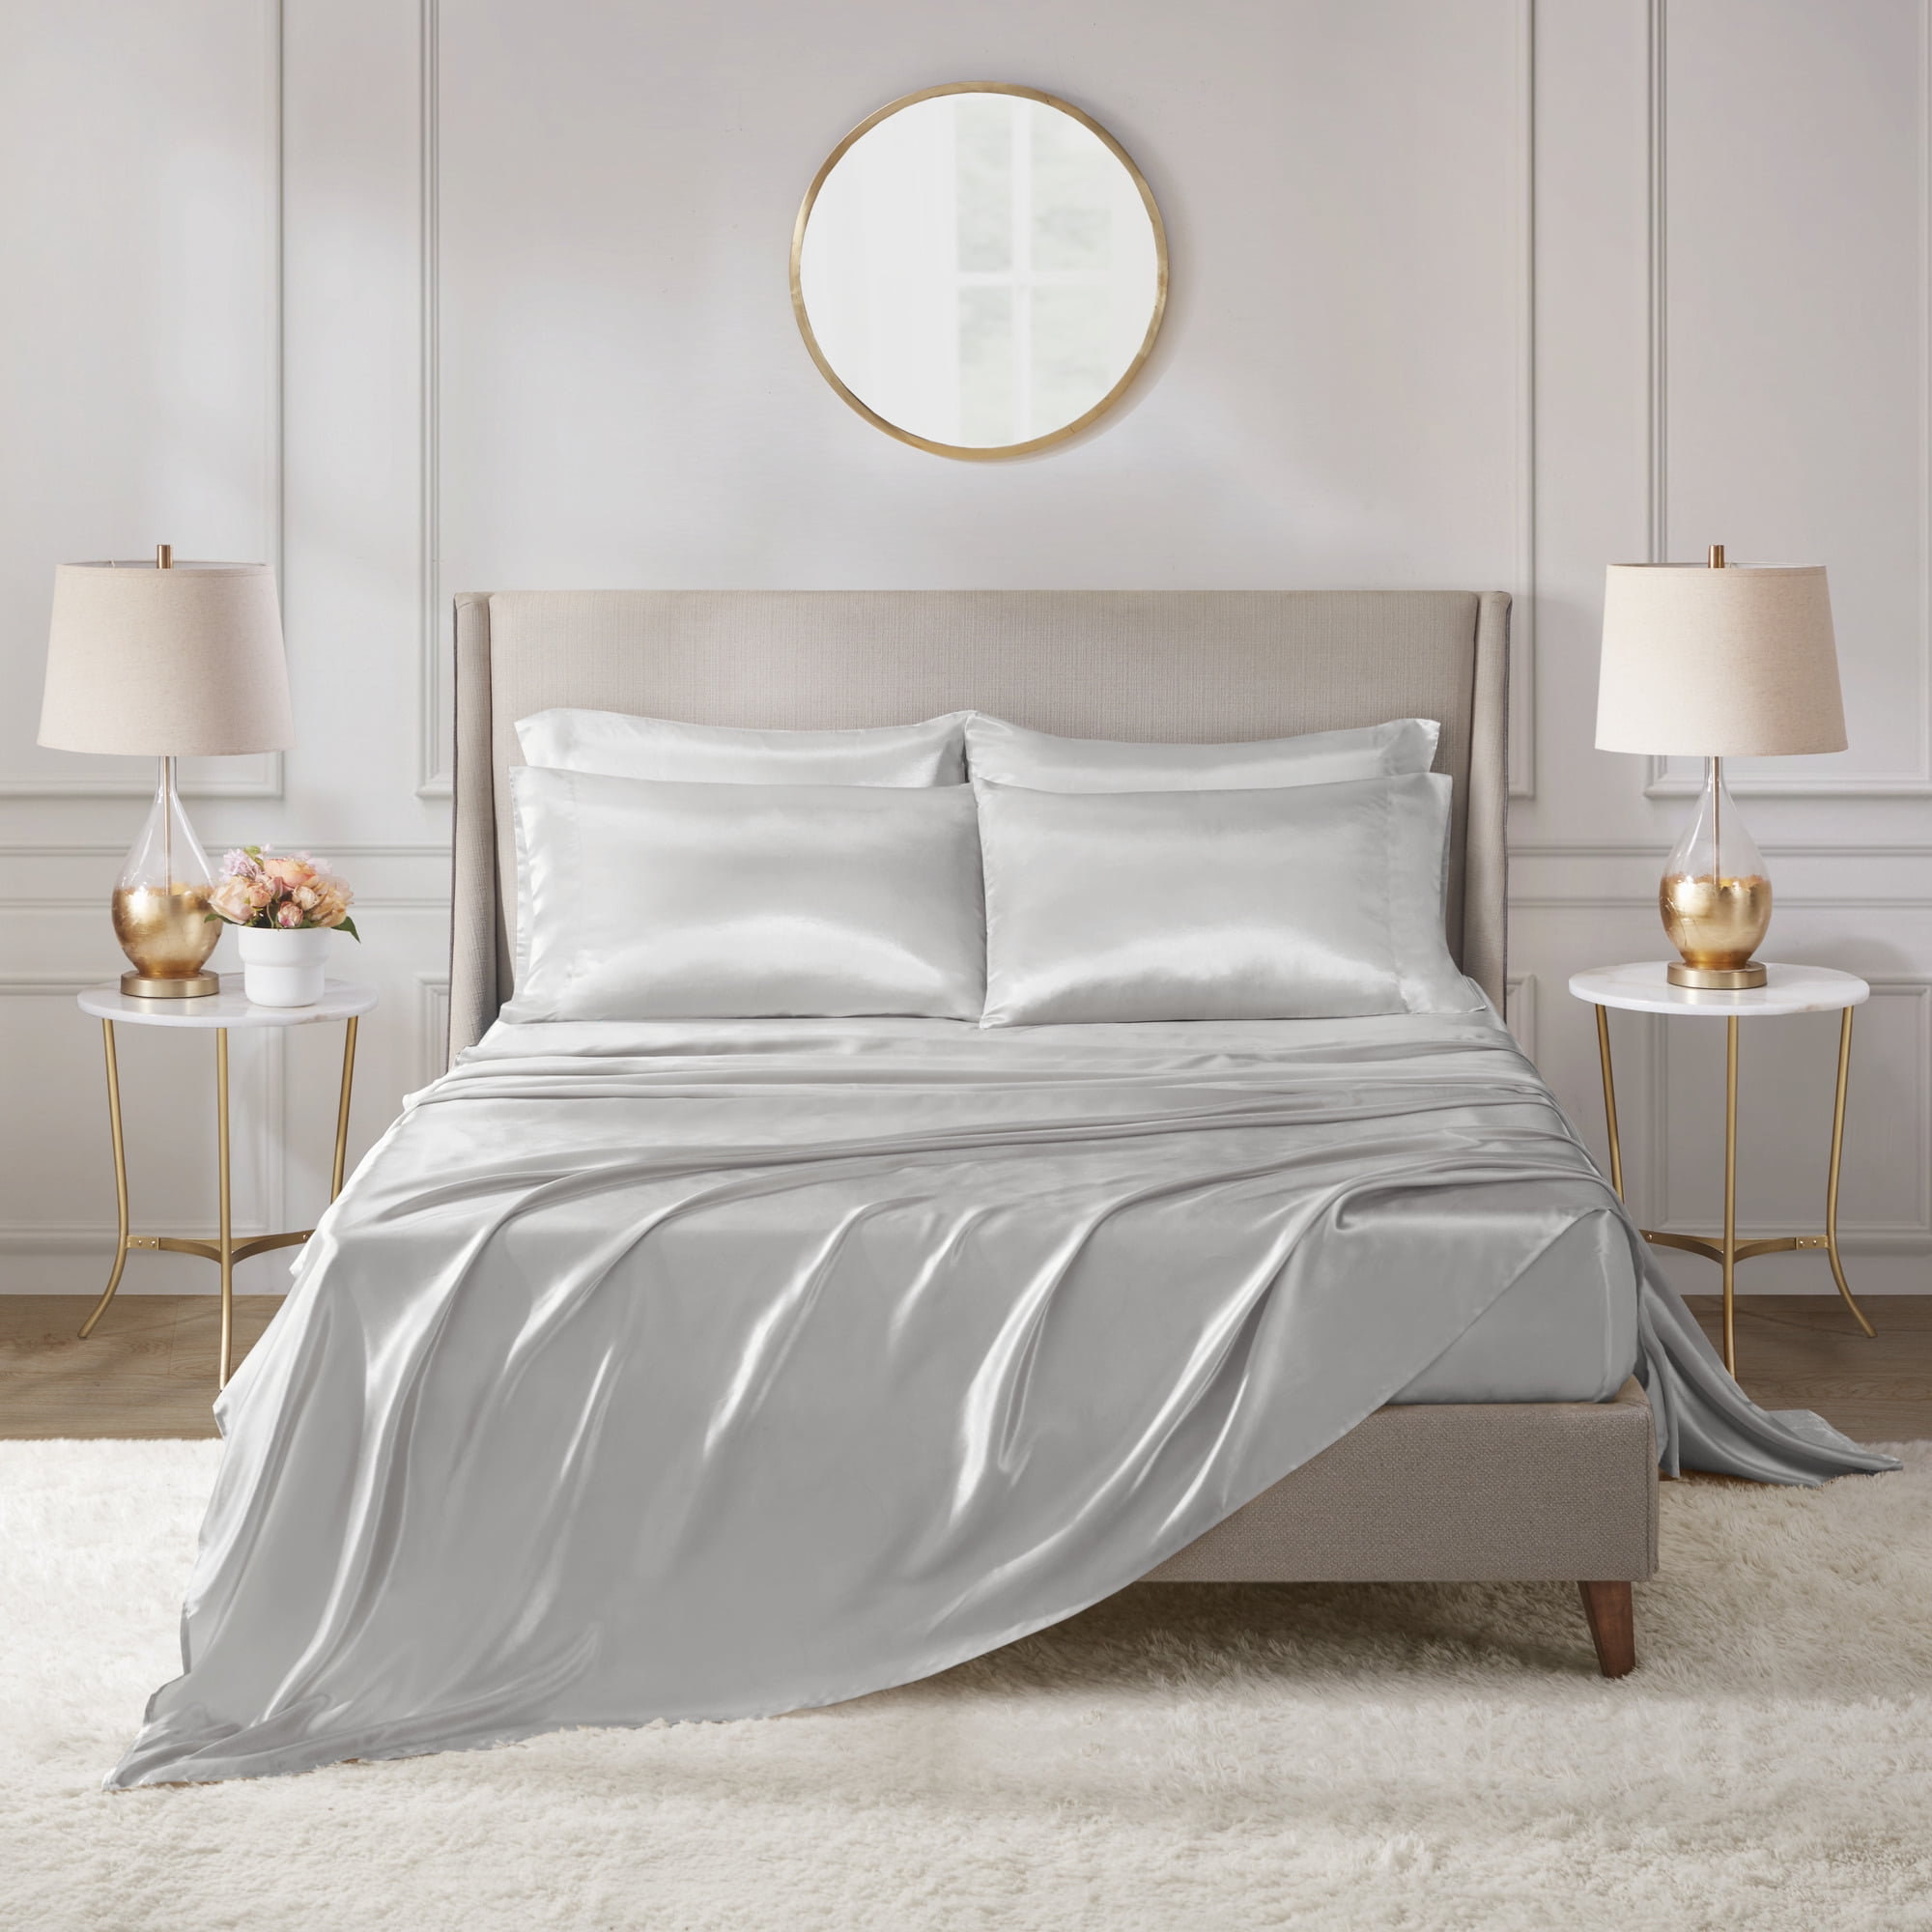 Super Soft Silky Satin Luxury Bed Sheet Set (Grey, Queen / King